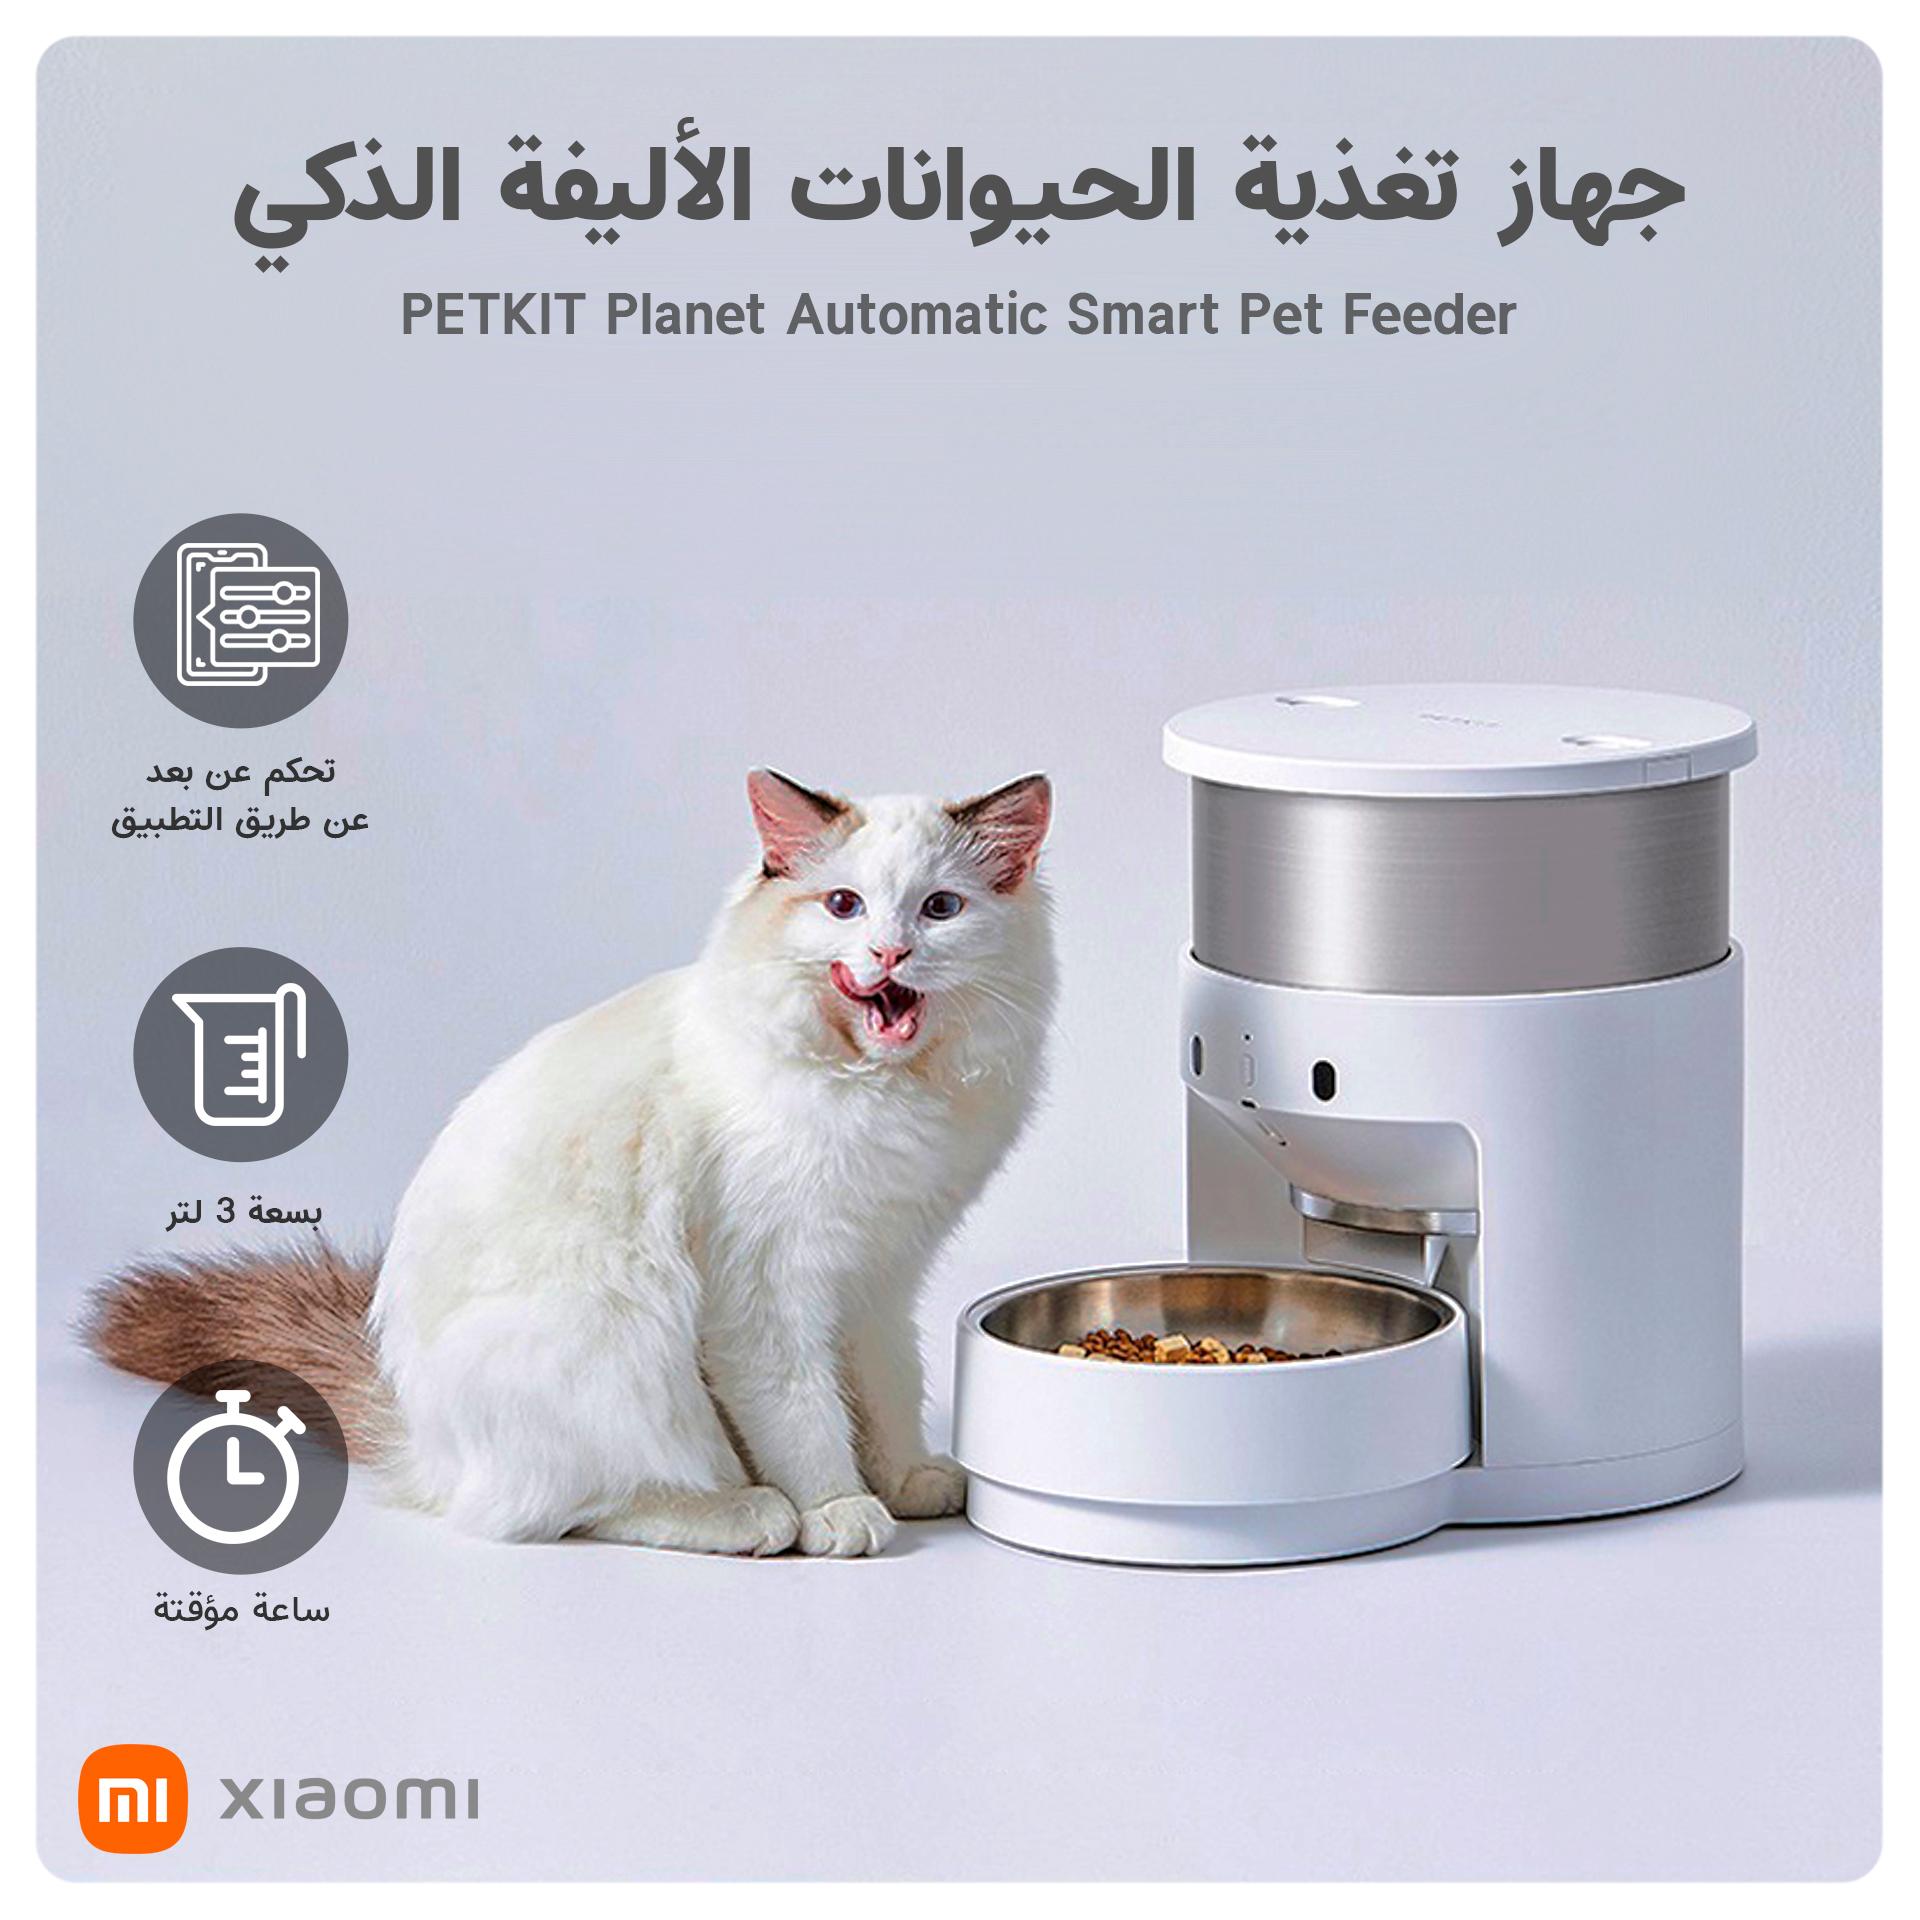 PETKIT Planet Automatic Smart Pet Feeder 3 liters